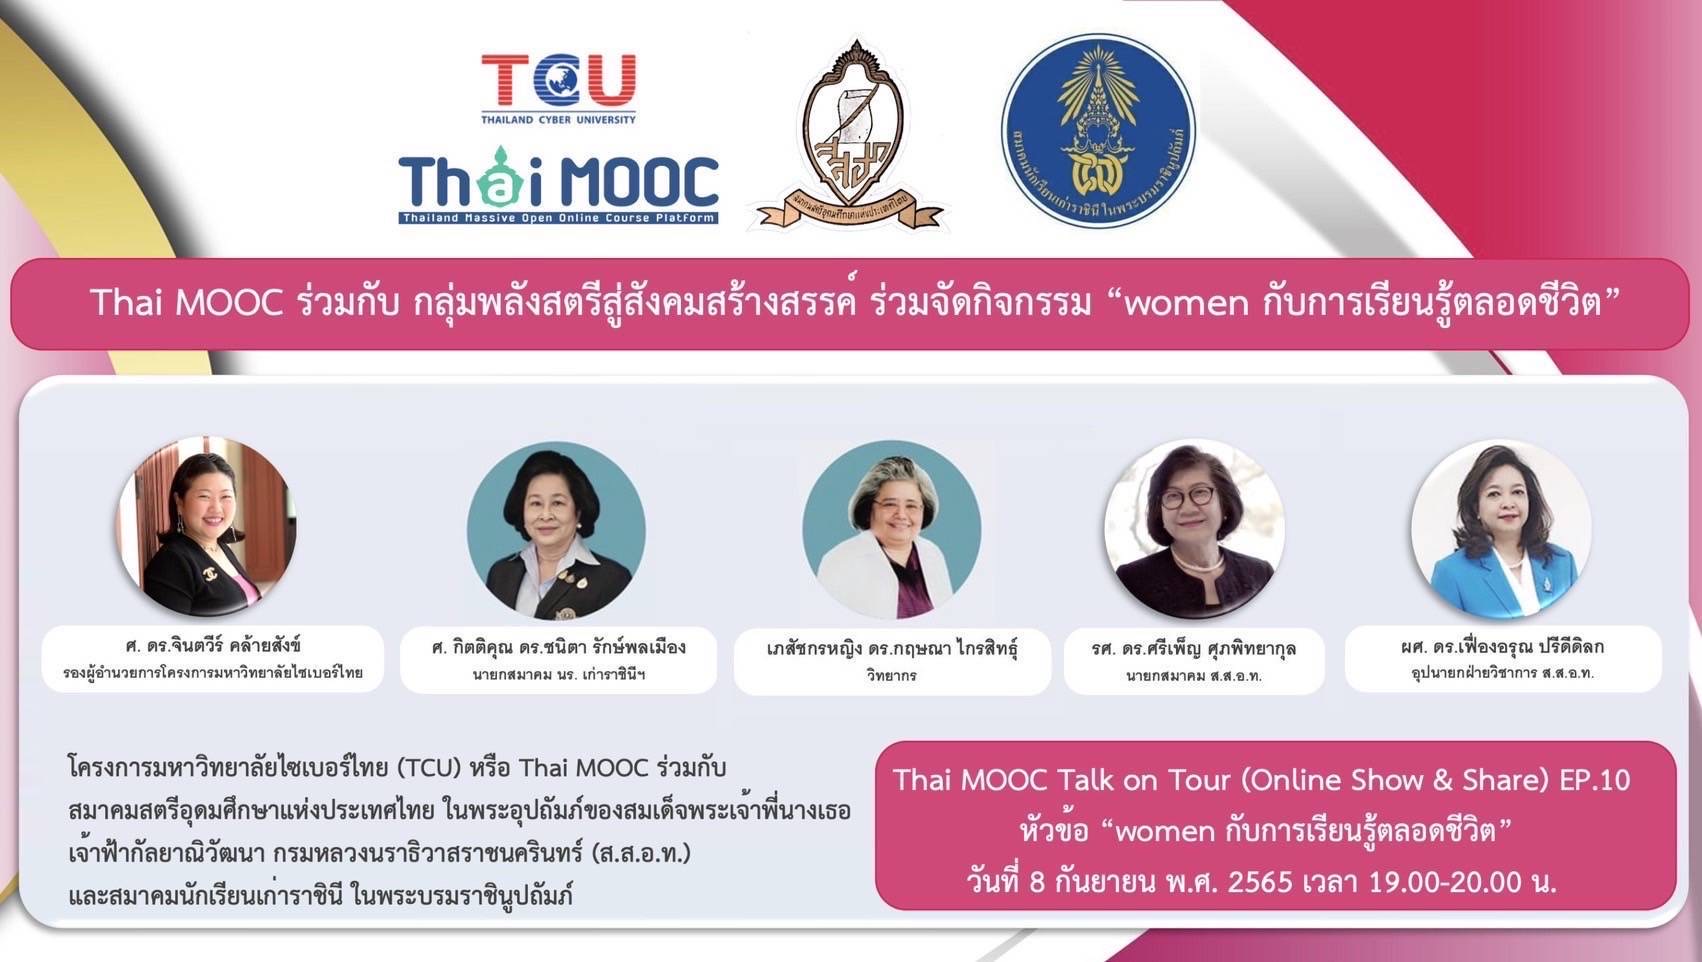 Thai MOOC ร่วมกับ กลุ่มพลังสตรีสู่สังคมสร้างสรรค์ ร่วมจัดกิจกรรม “Woman กับการเรียนรู้ตลอดชีวิต”